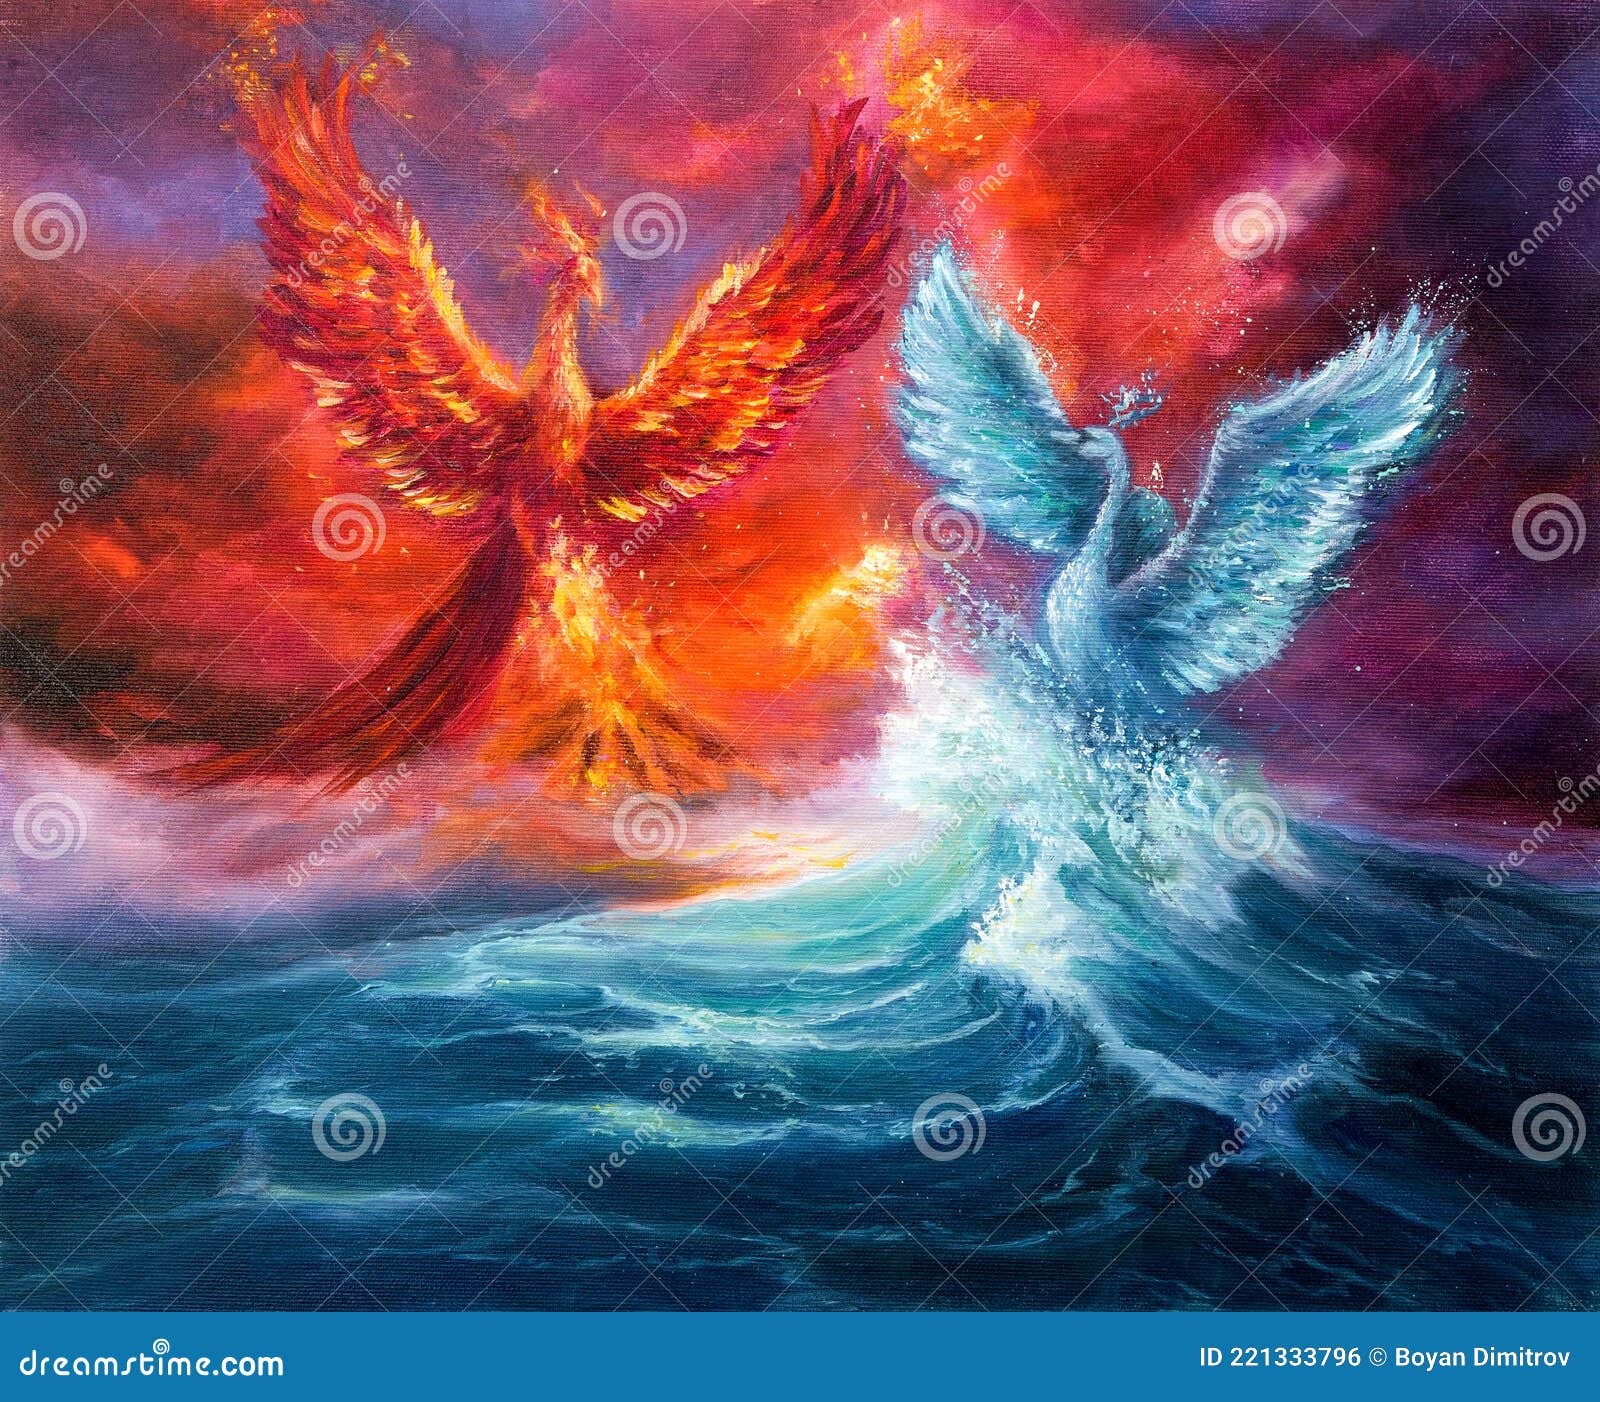 mythology phoenix and spiritual swan